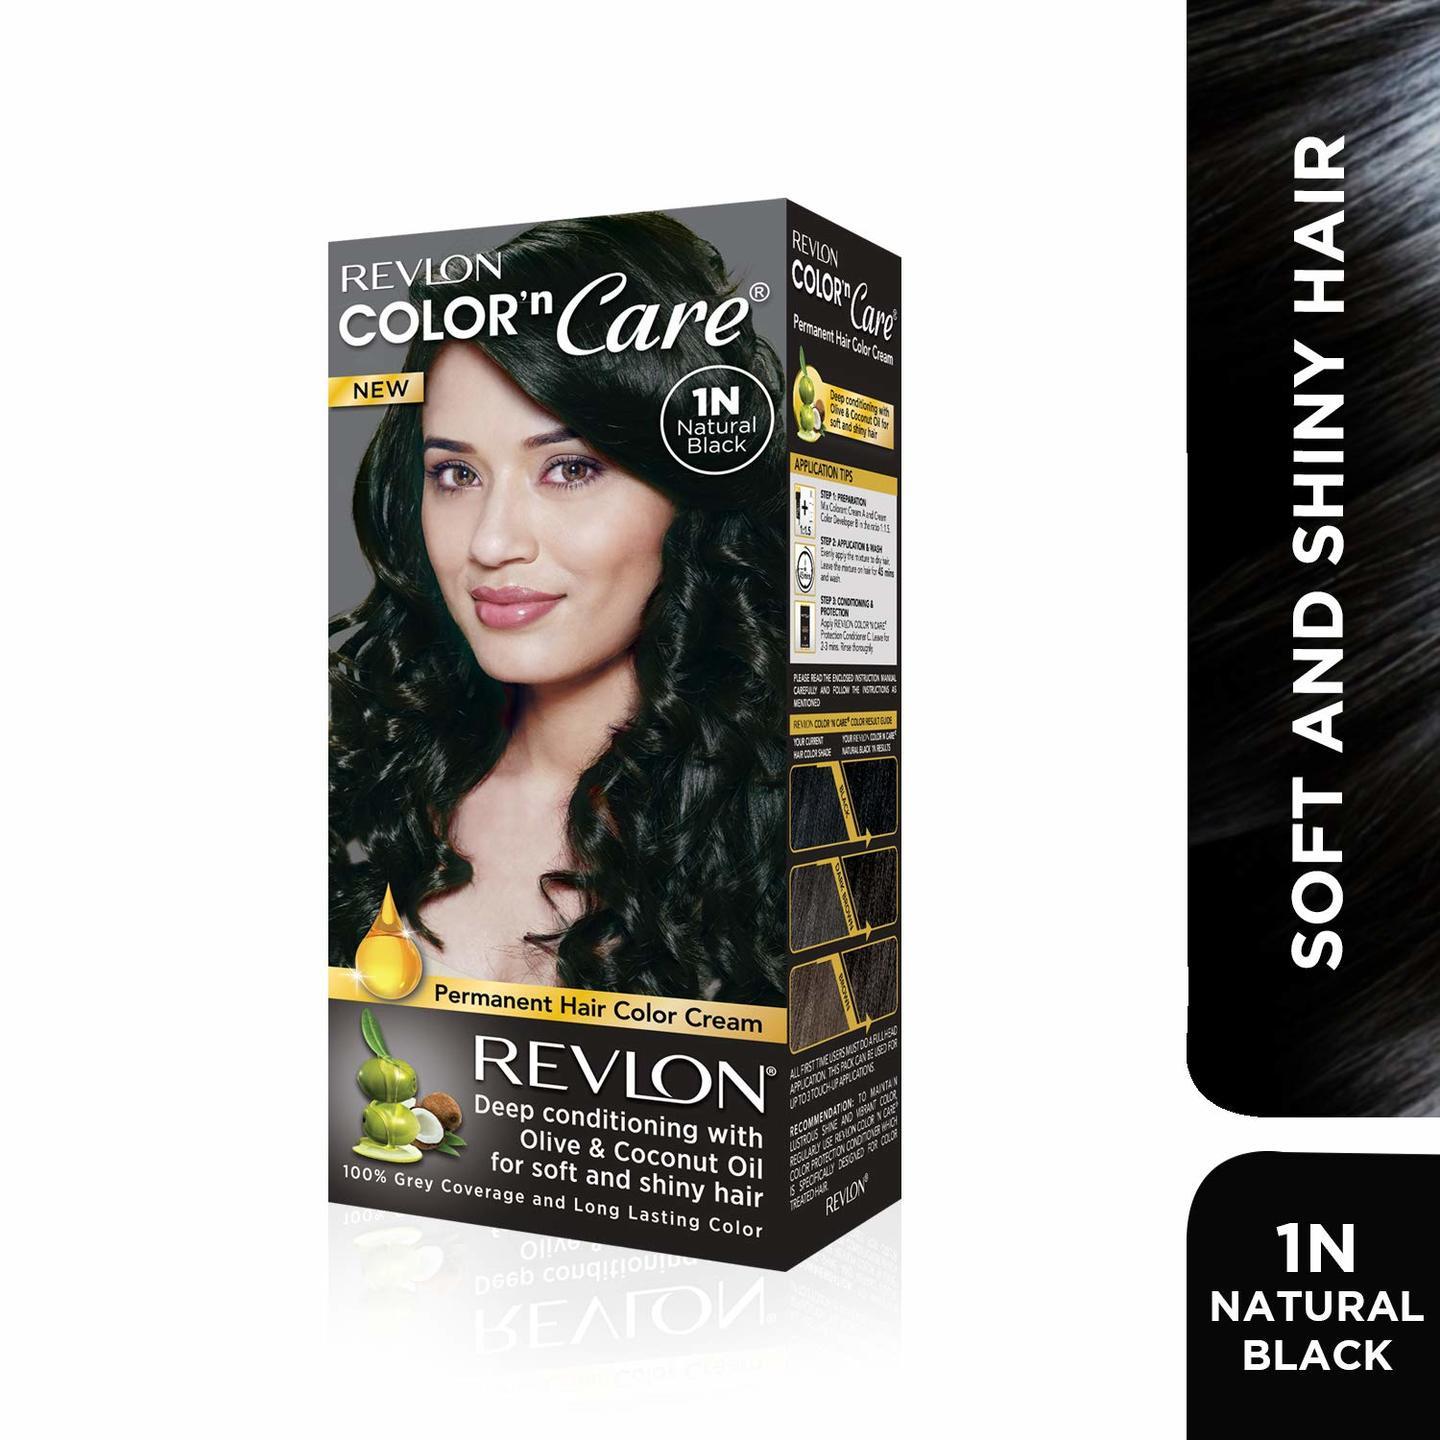 Revlon COLOR N CARE NATURAL BLACK 1N Hair colour